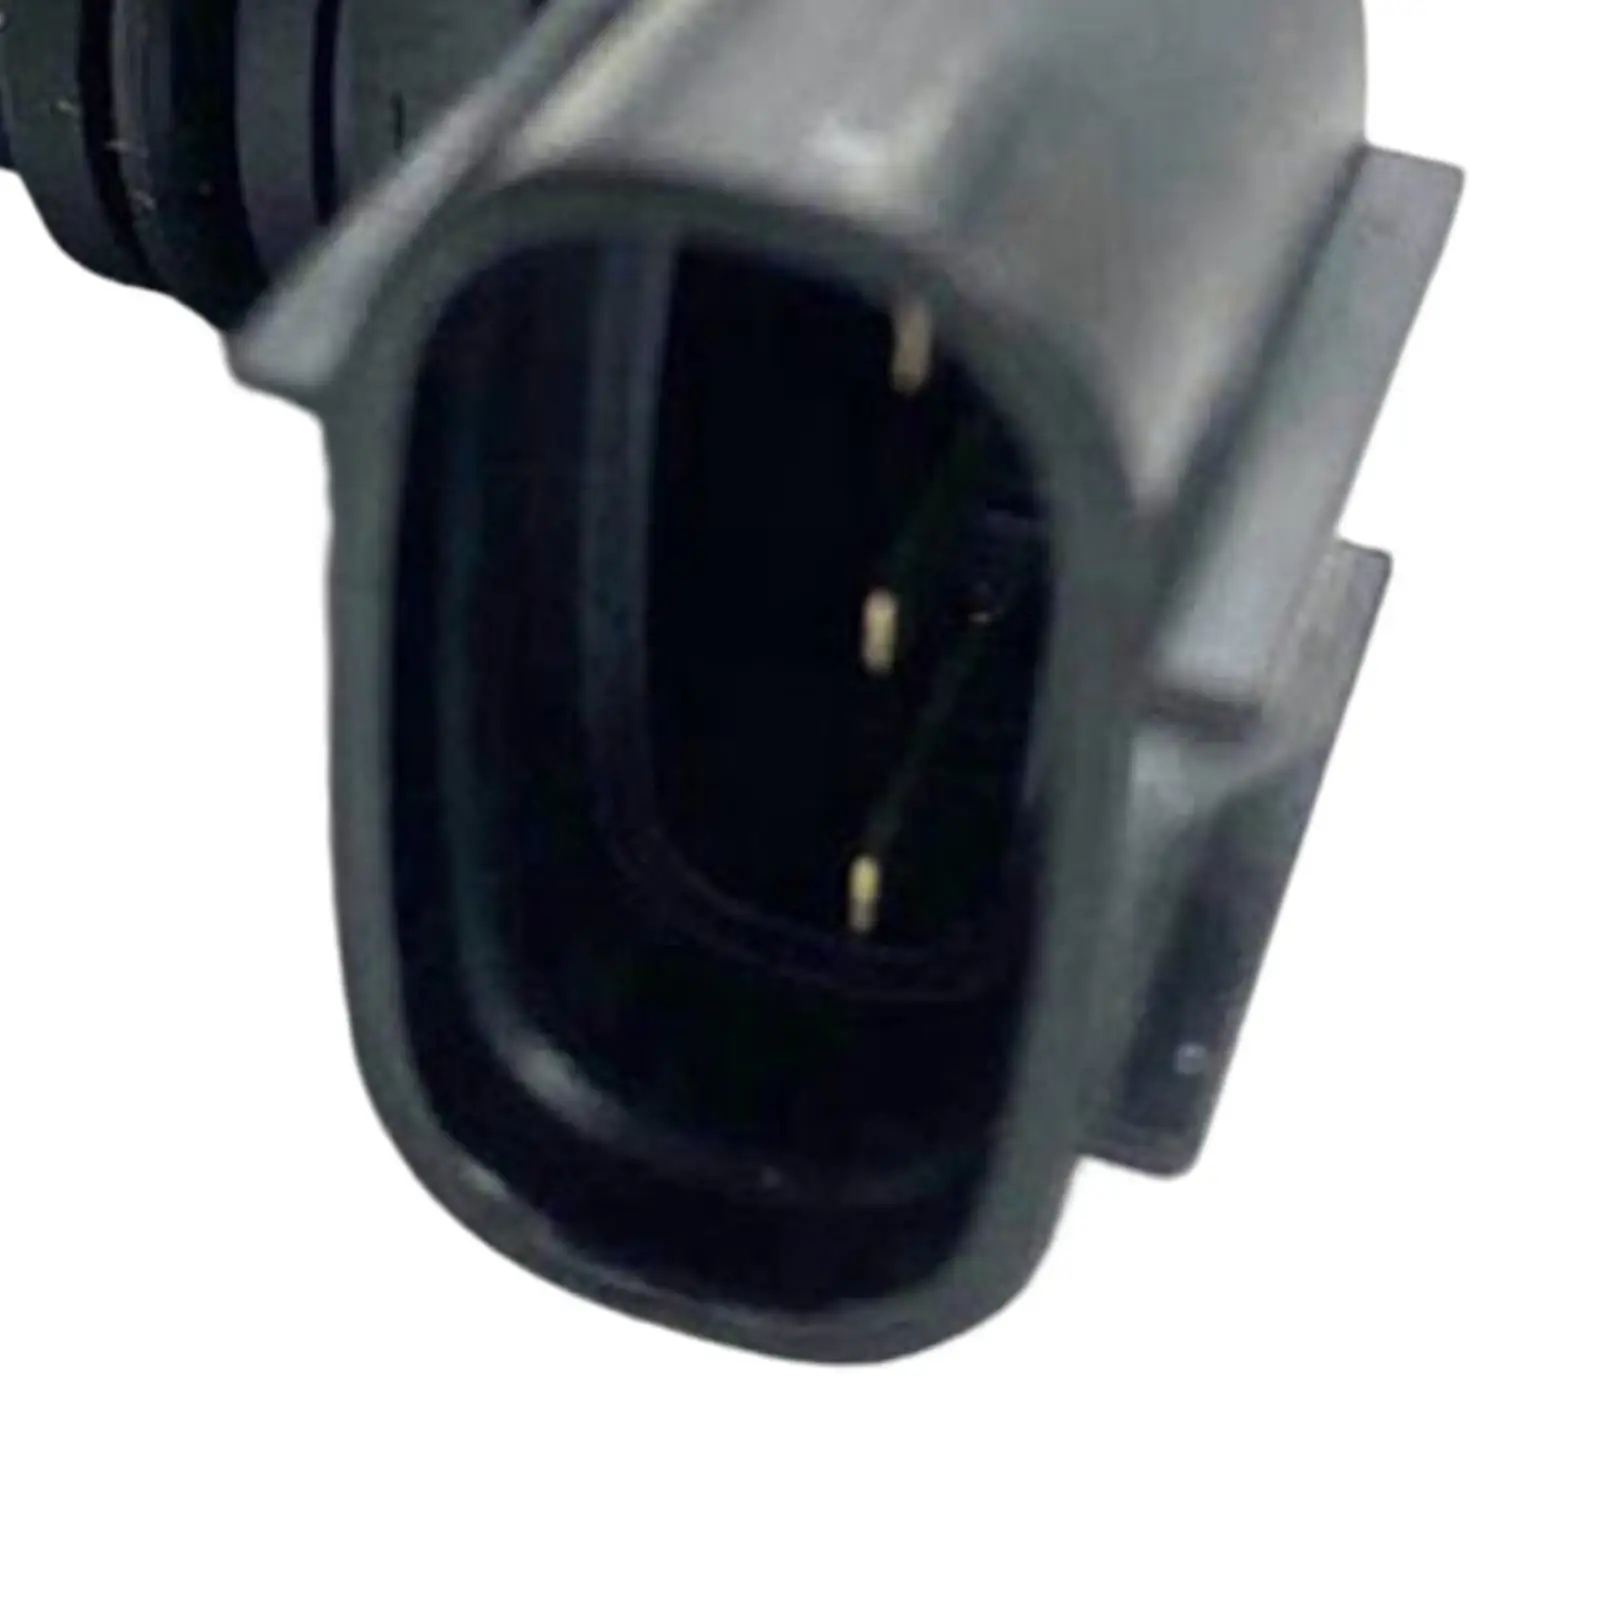 Vehicle Camshaft Position Sensor 8980190240 Directly Replace 8-98019-024-0  Generator for Isuzu 4HK1